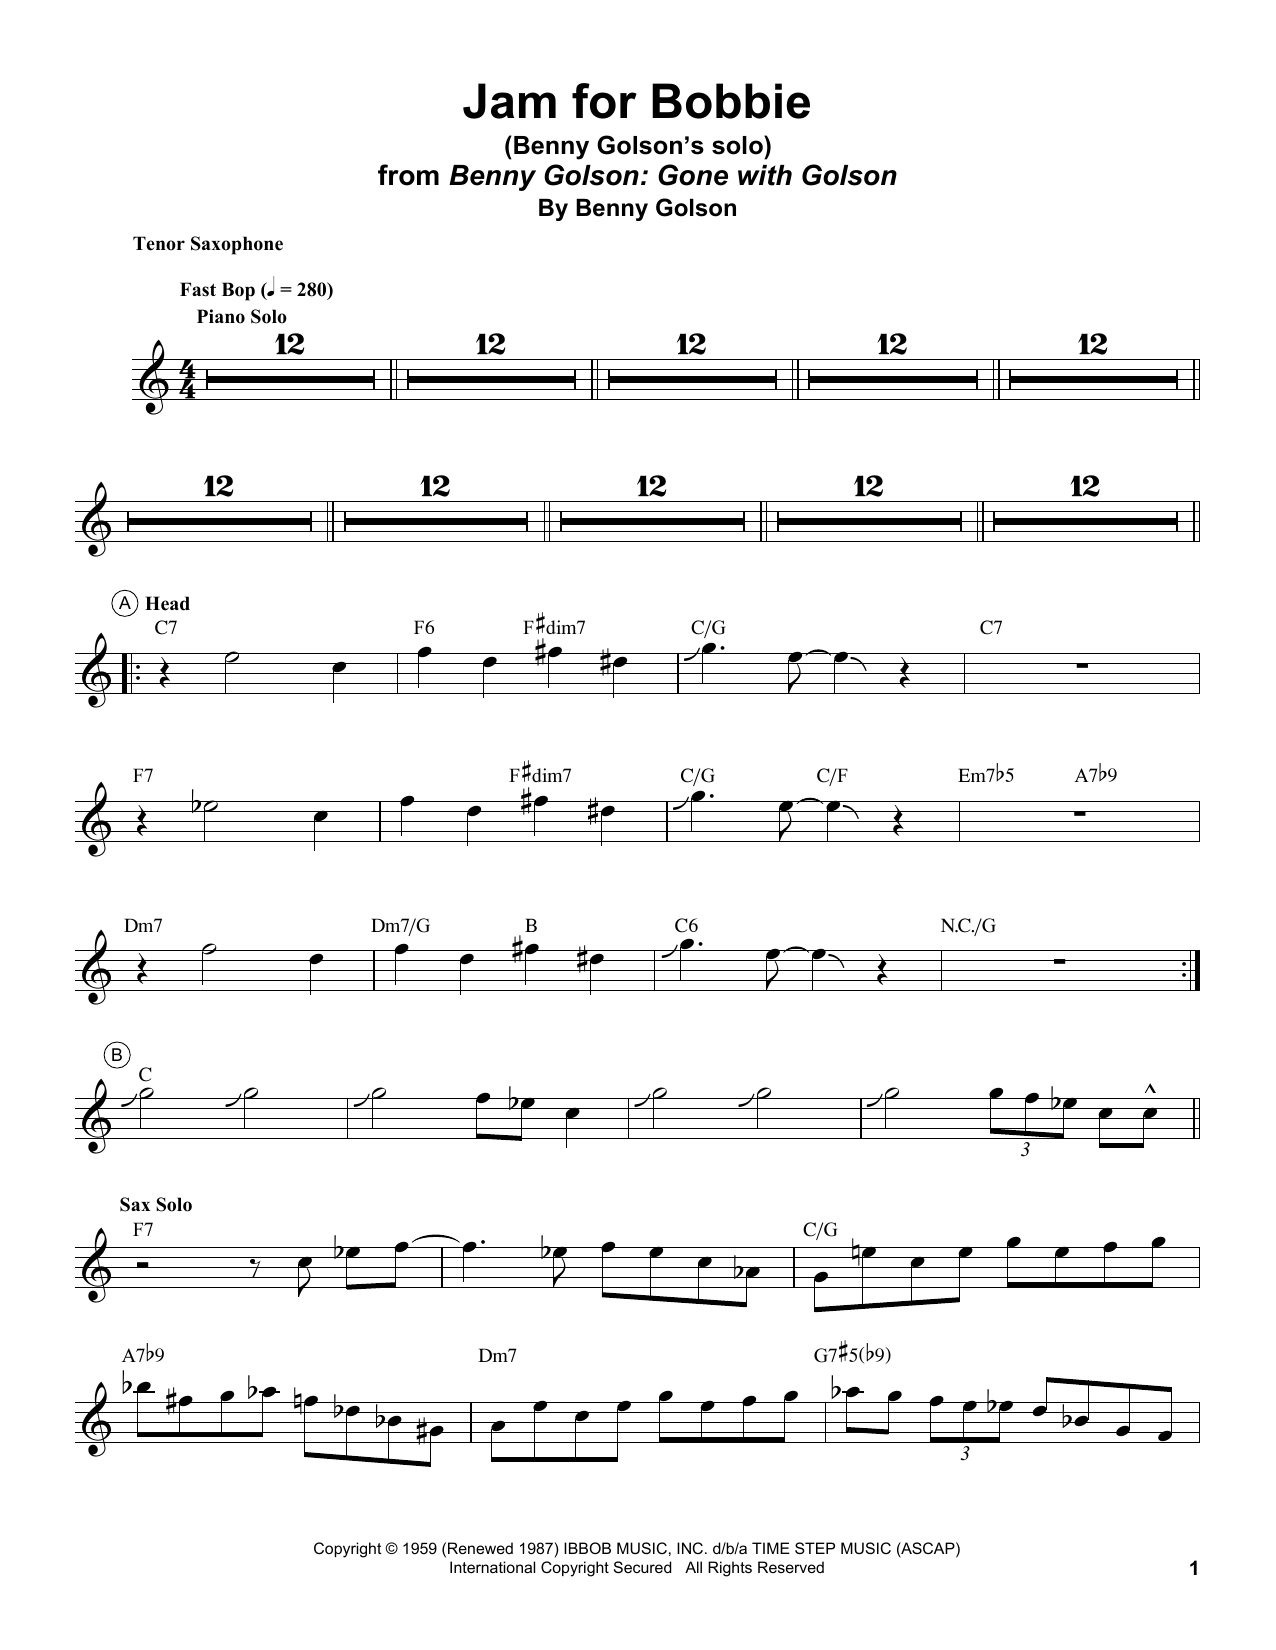 Benny Golson Jam For Bobbie Sheet Music Notes & Chords for Tenor Sax Transcription - Download or Print PDF